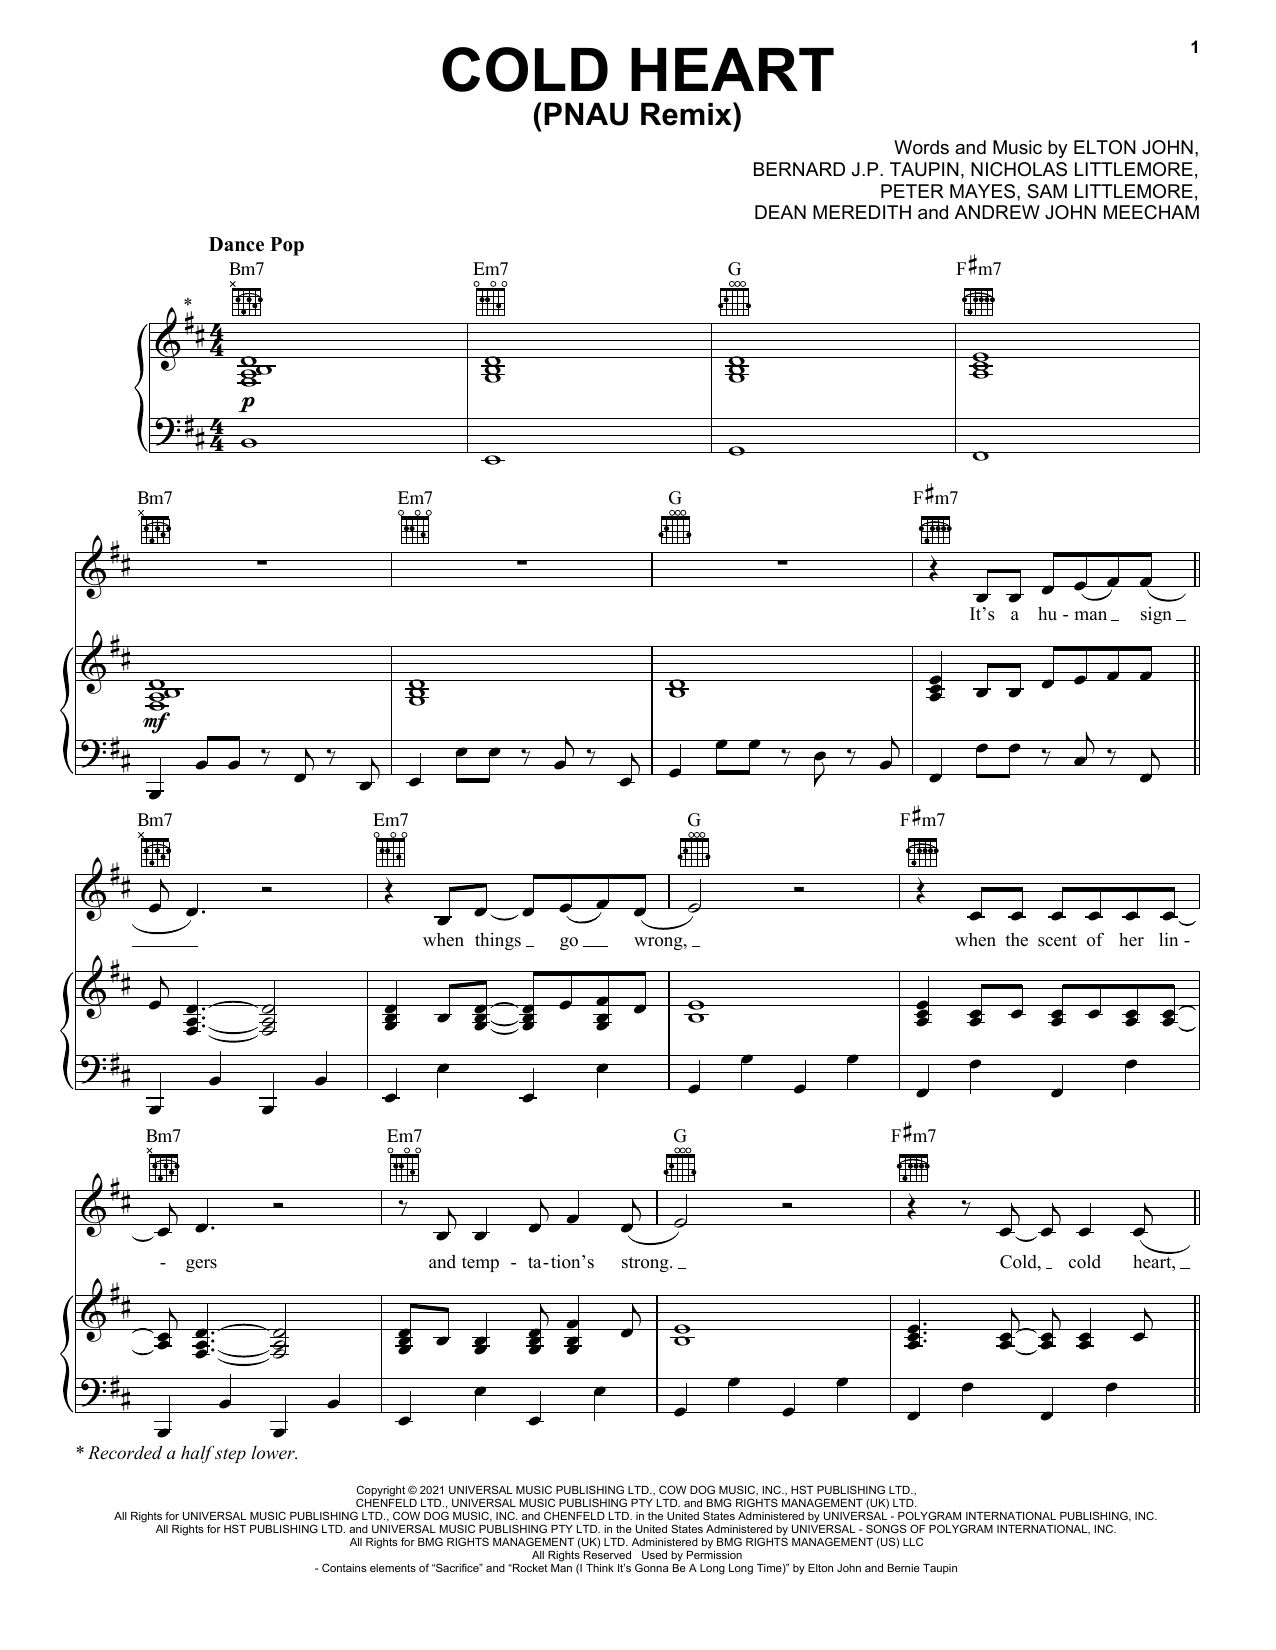 Elton John & Dua Lipa Cold Heart (PNAU Remix) Sheet Music Notes & Chords for Ukulele - Download or Print PDF